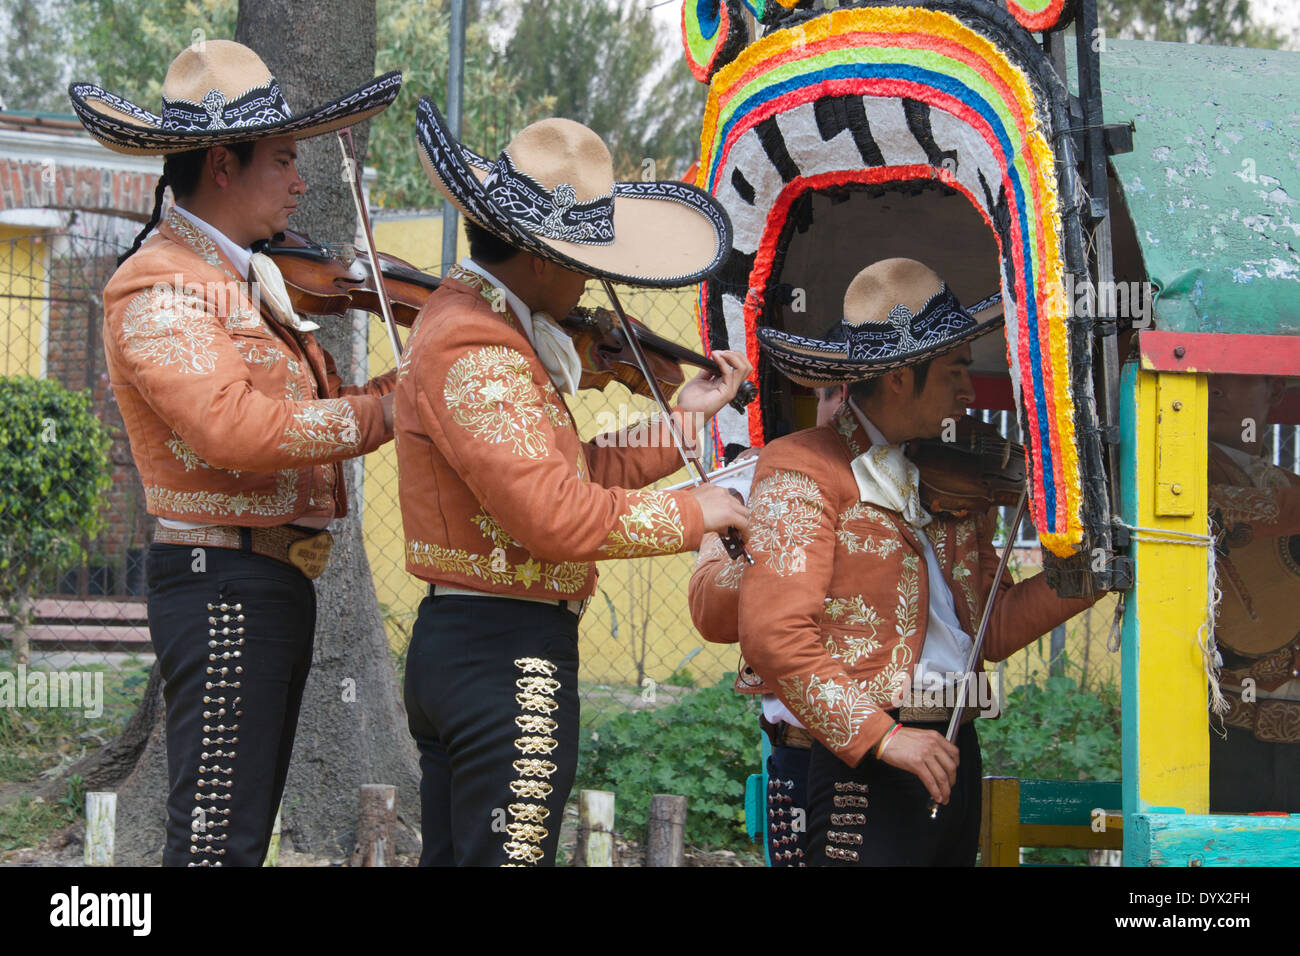 Three Mexican violinists in national costume Xochmilco Mexico City Mexico Stock Photo